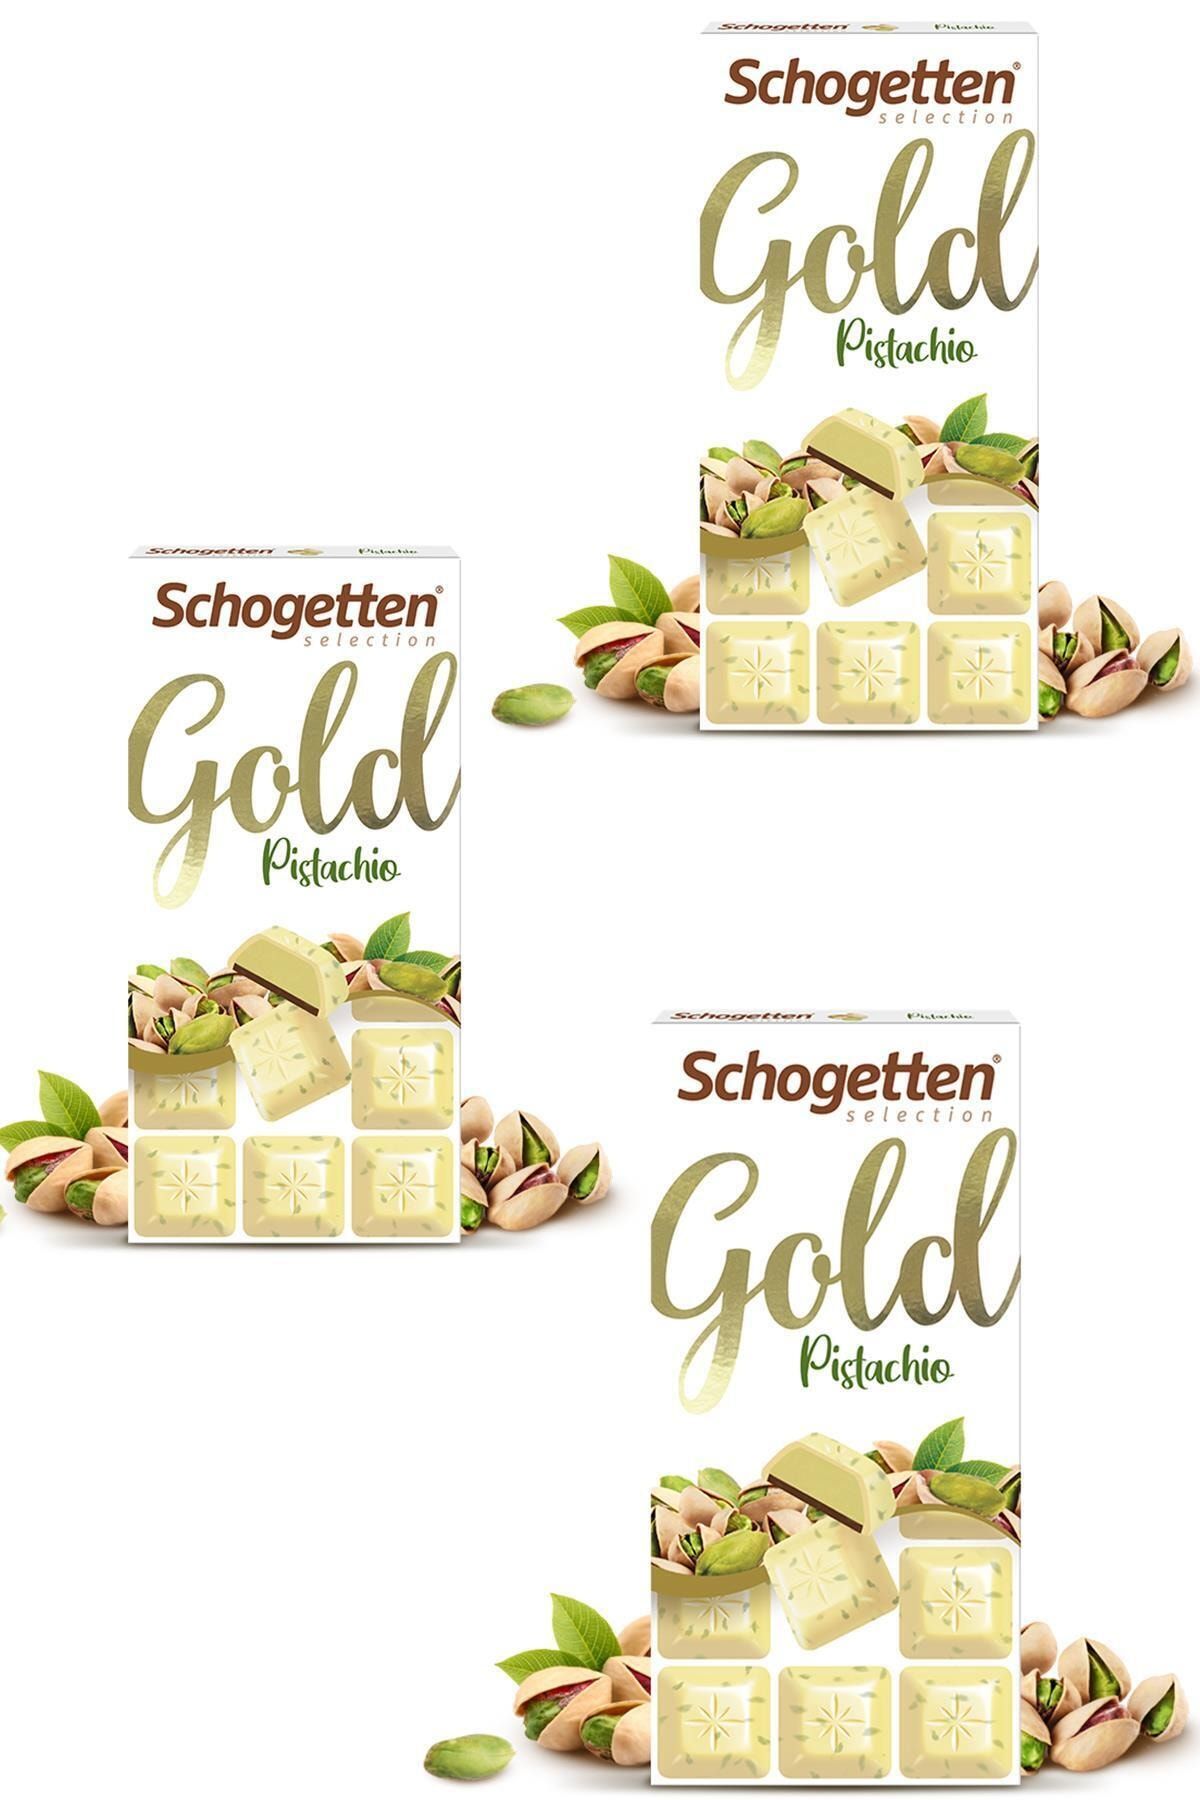 Schogetten Selection Gold Pistachio Çikolata 100g - 3 Adet